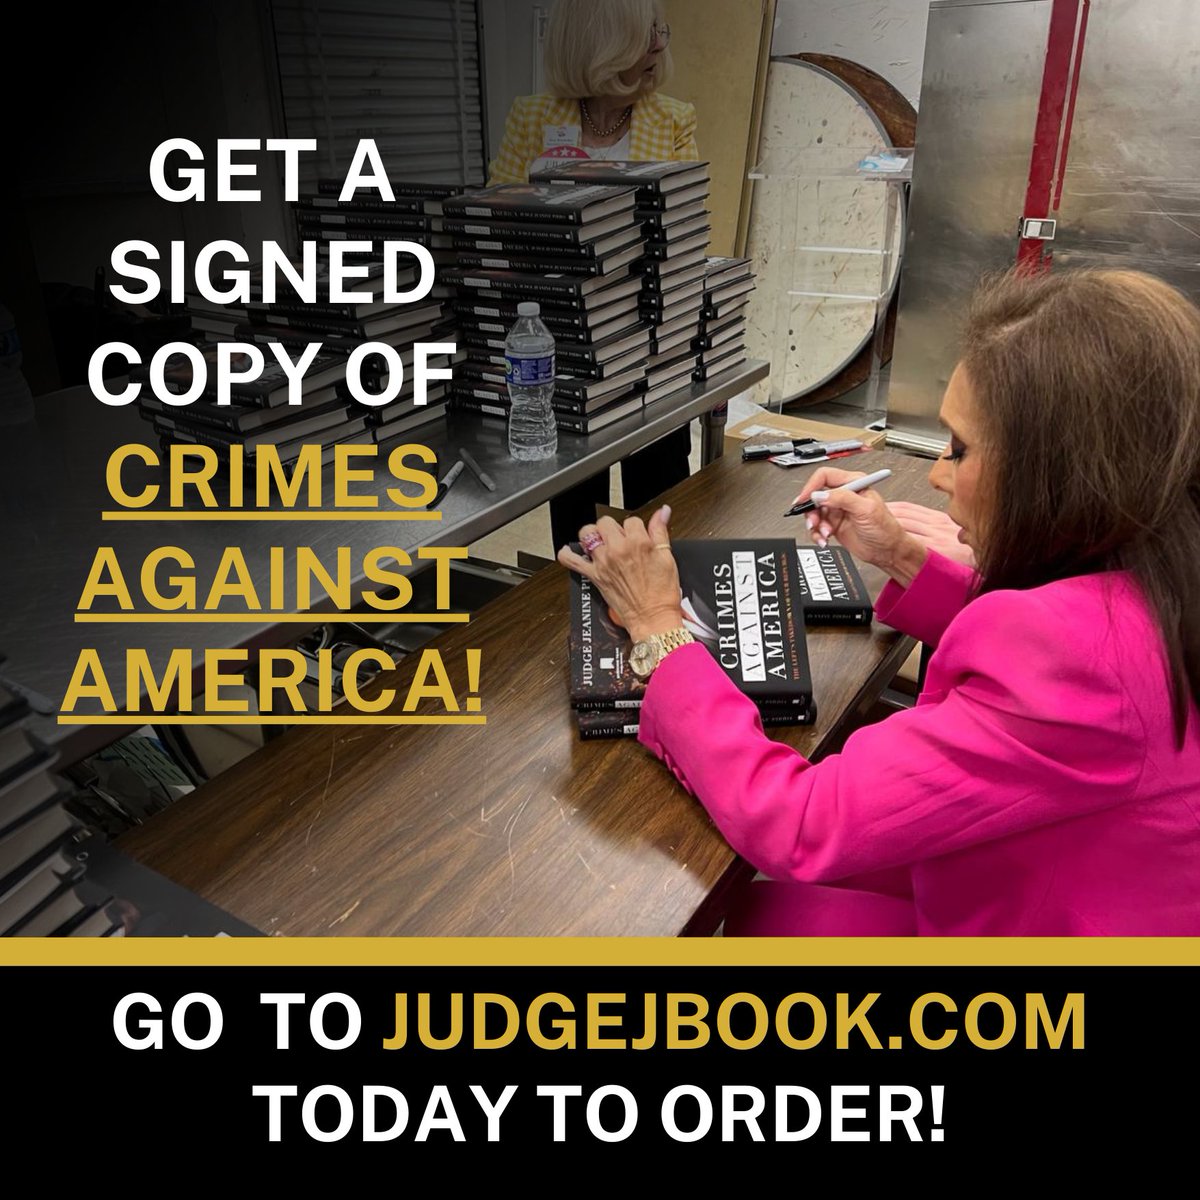 Get your copy of @JudgeJeanine's book today at JUDGEJBOOK.com!